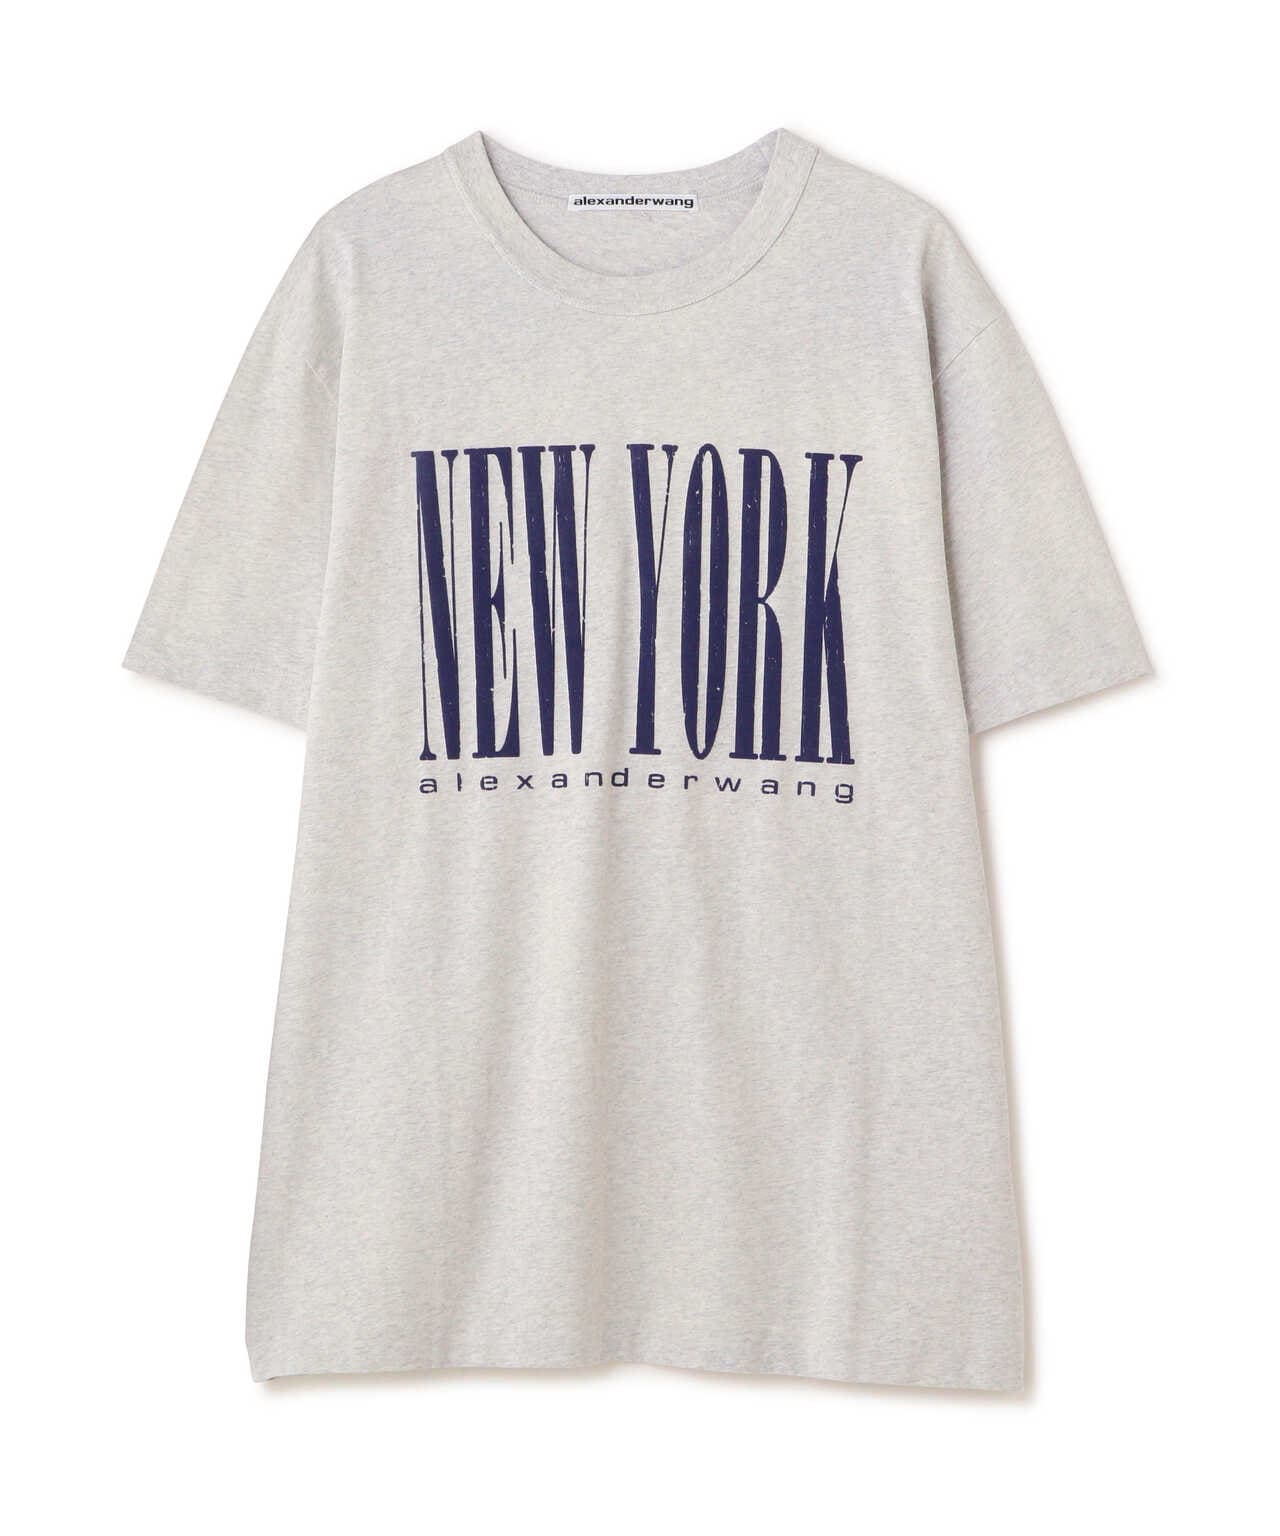 alexanderwang newyork Tシャツ付属品はございますでしょうか